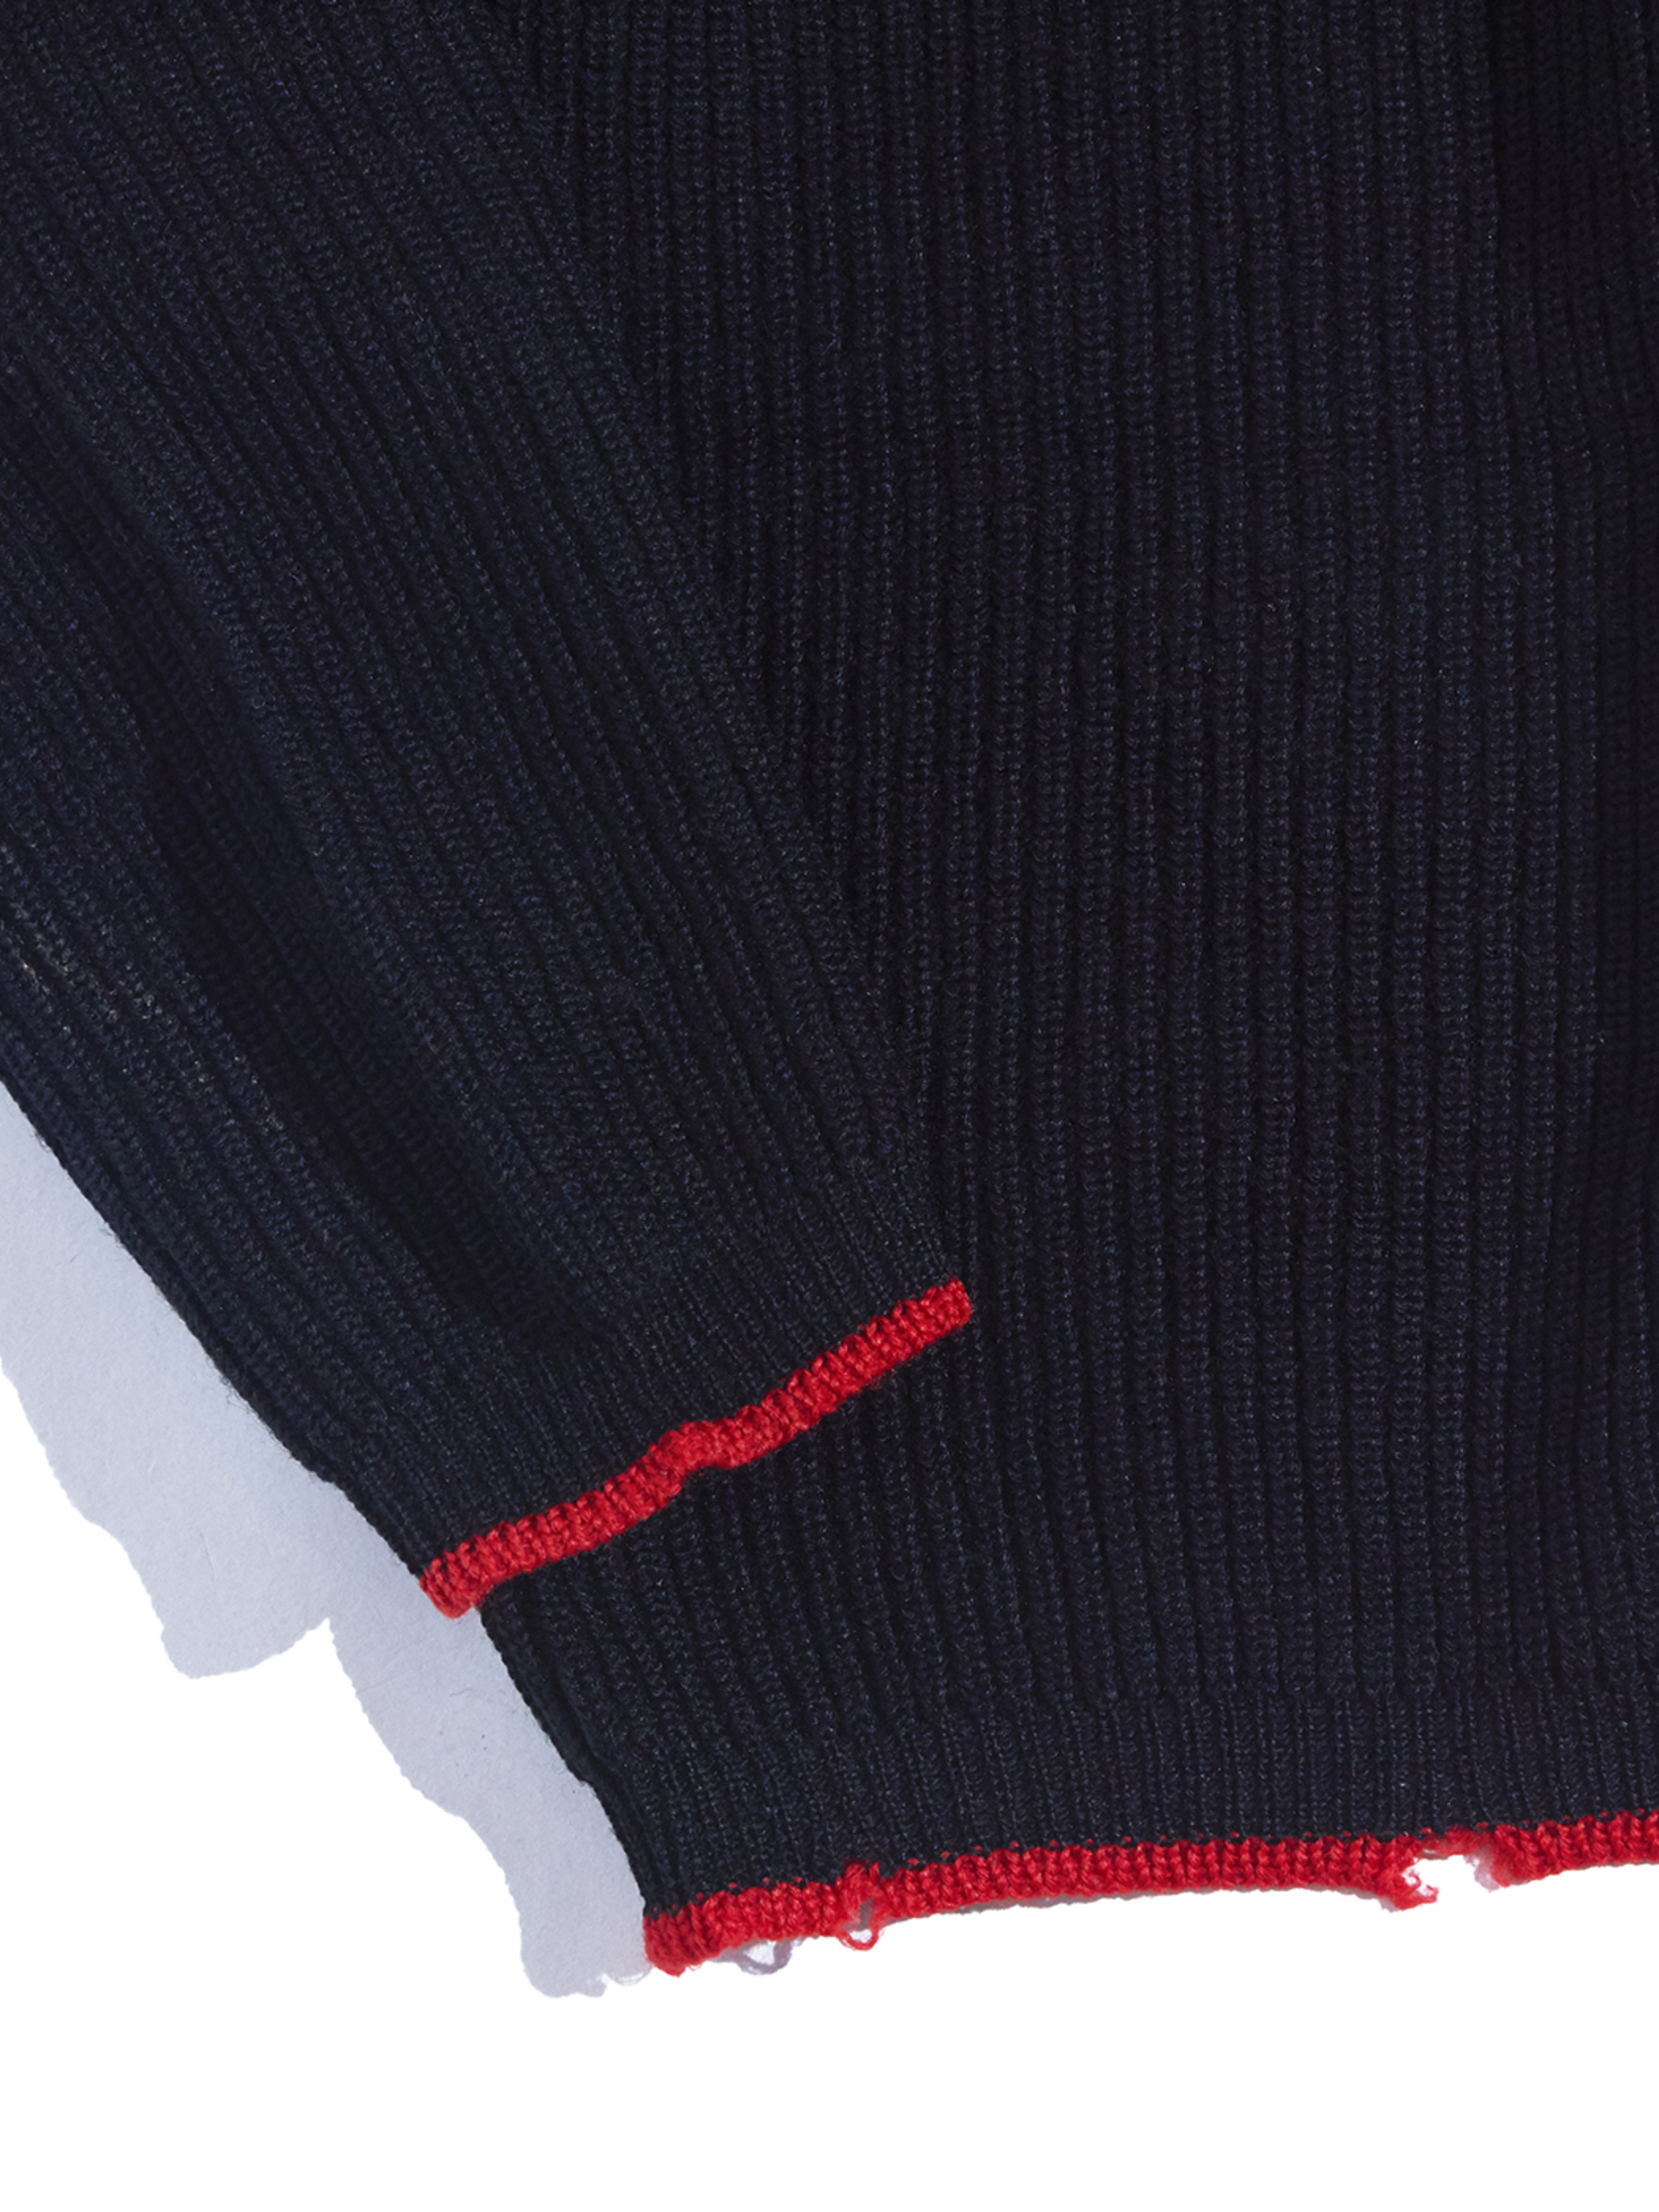 1960s "OBERMEYER" high neck wool half zip knit -BLACK-